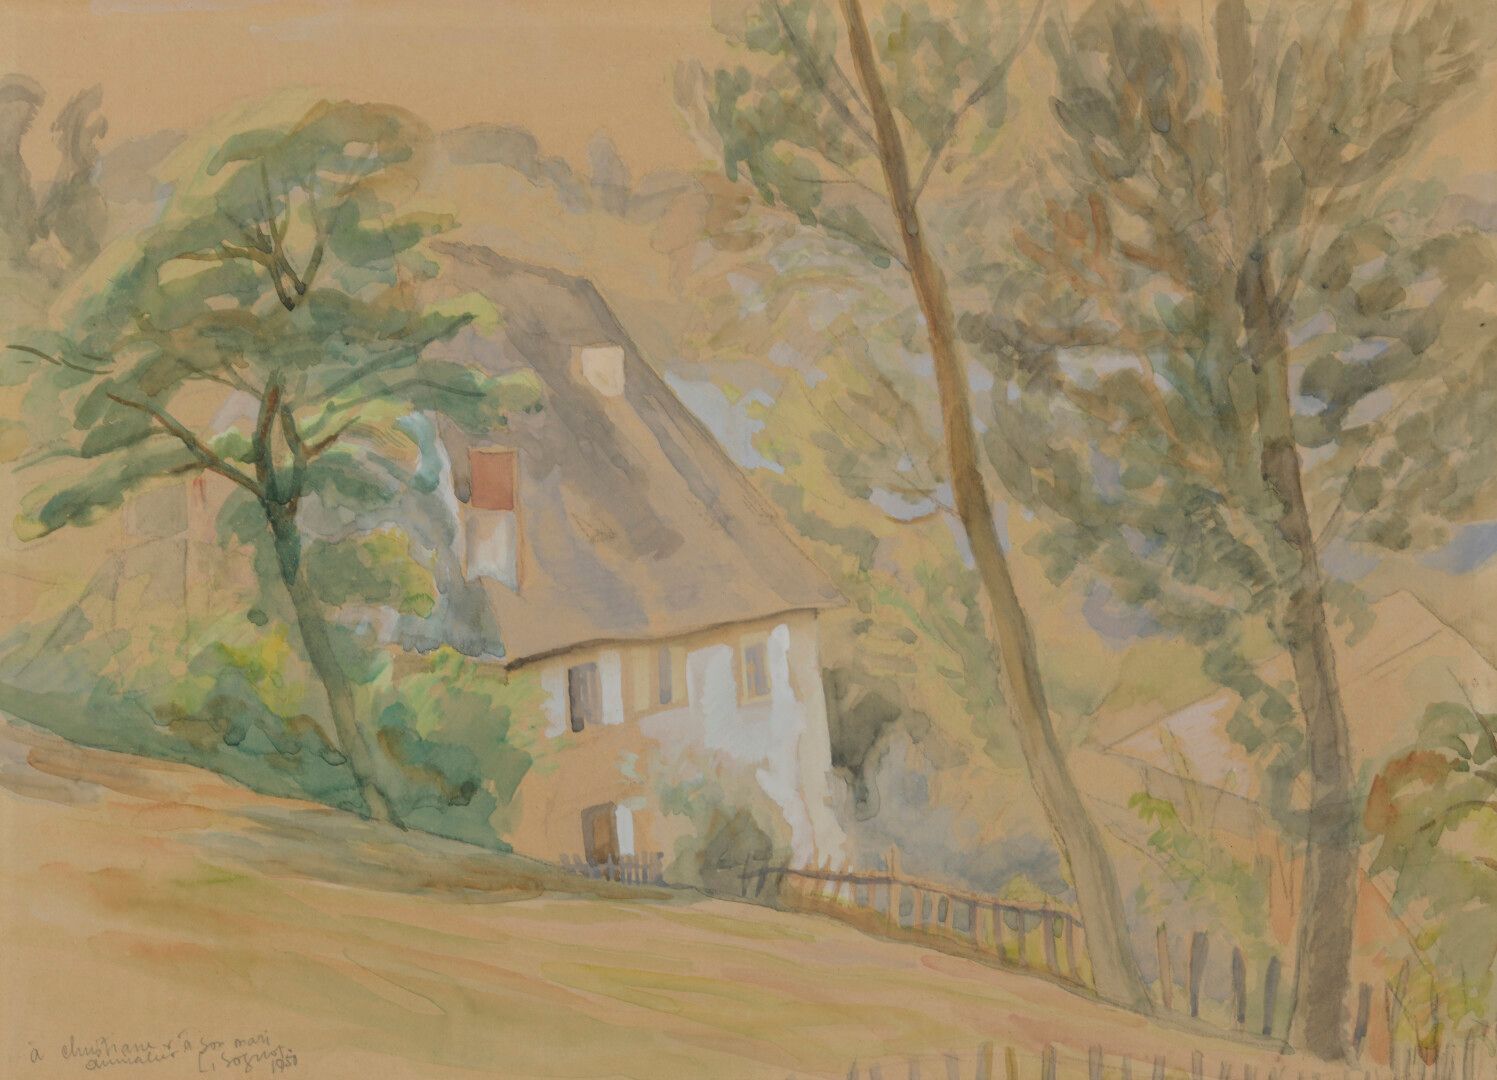 Louis SOGNOT (1892-1969) Louis SOGNOT (1892-1969)

Paesaggio rurale

Coppia di a&hellip;